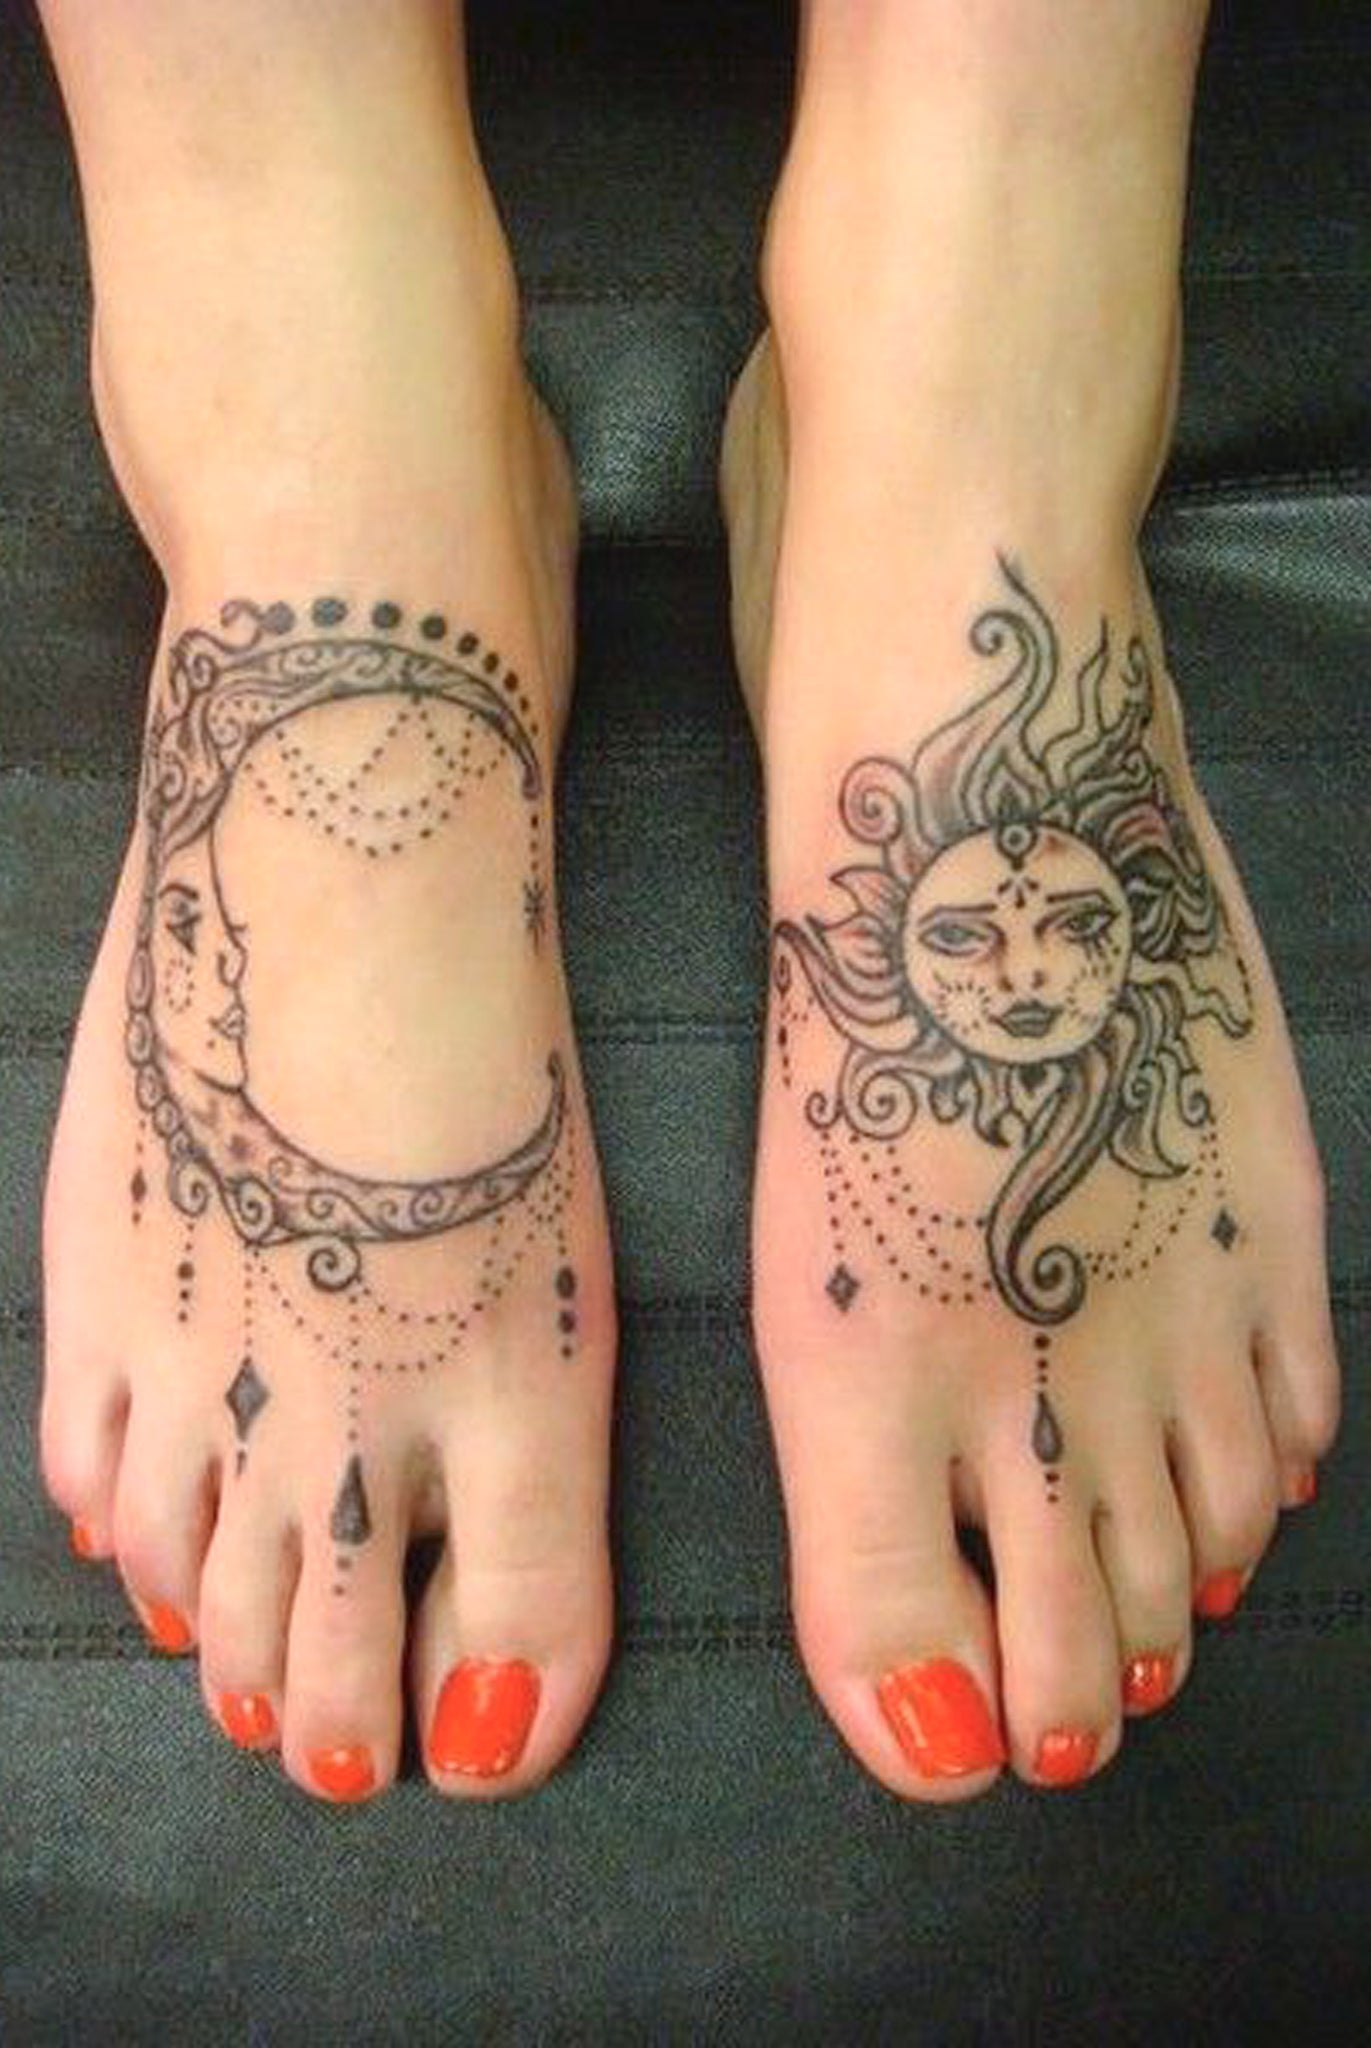 Foot Tattoo Ideas for Women - Mandala Lace Chandelier Sun & Crescent Moon Tattoo Ideas for Women -  ideas de tatuajes de pies para mujeres - www.MyBodiArt.com